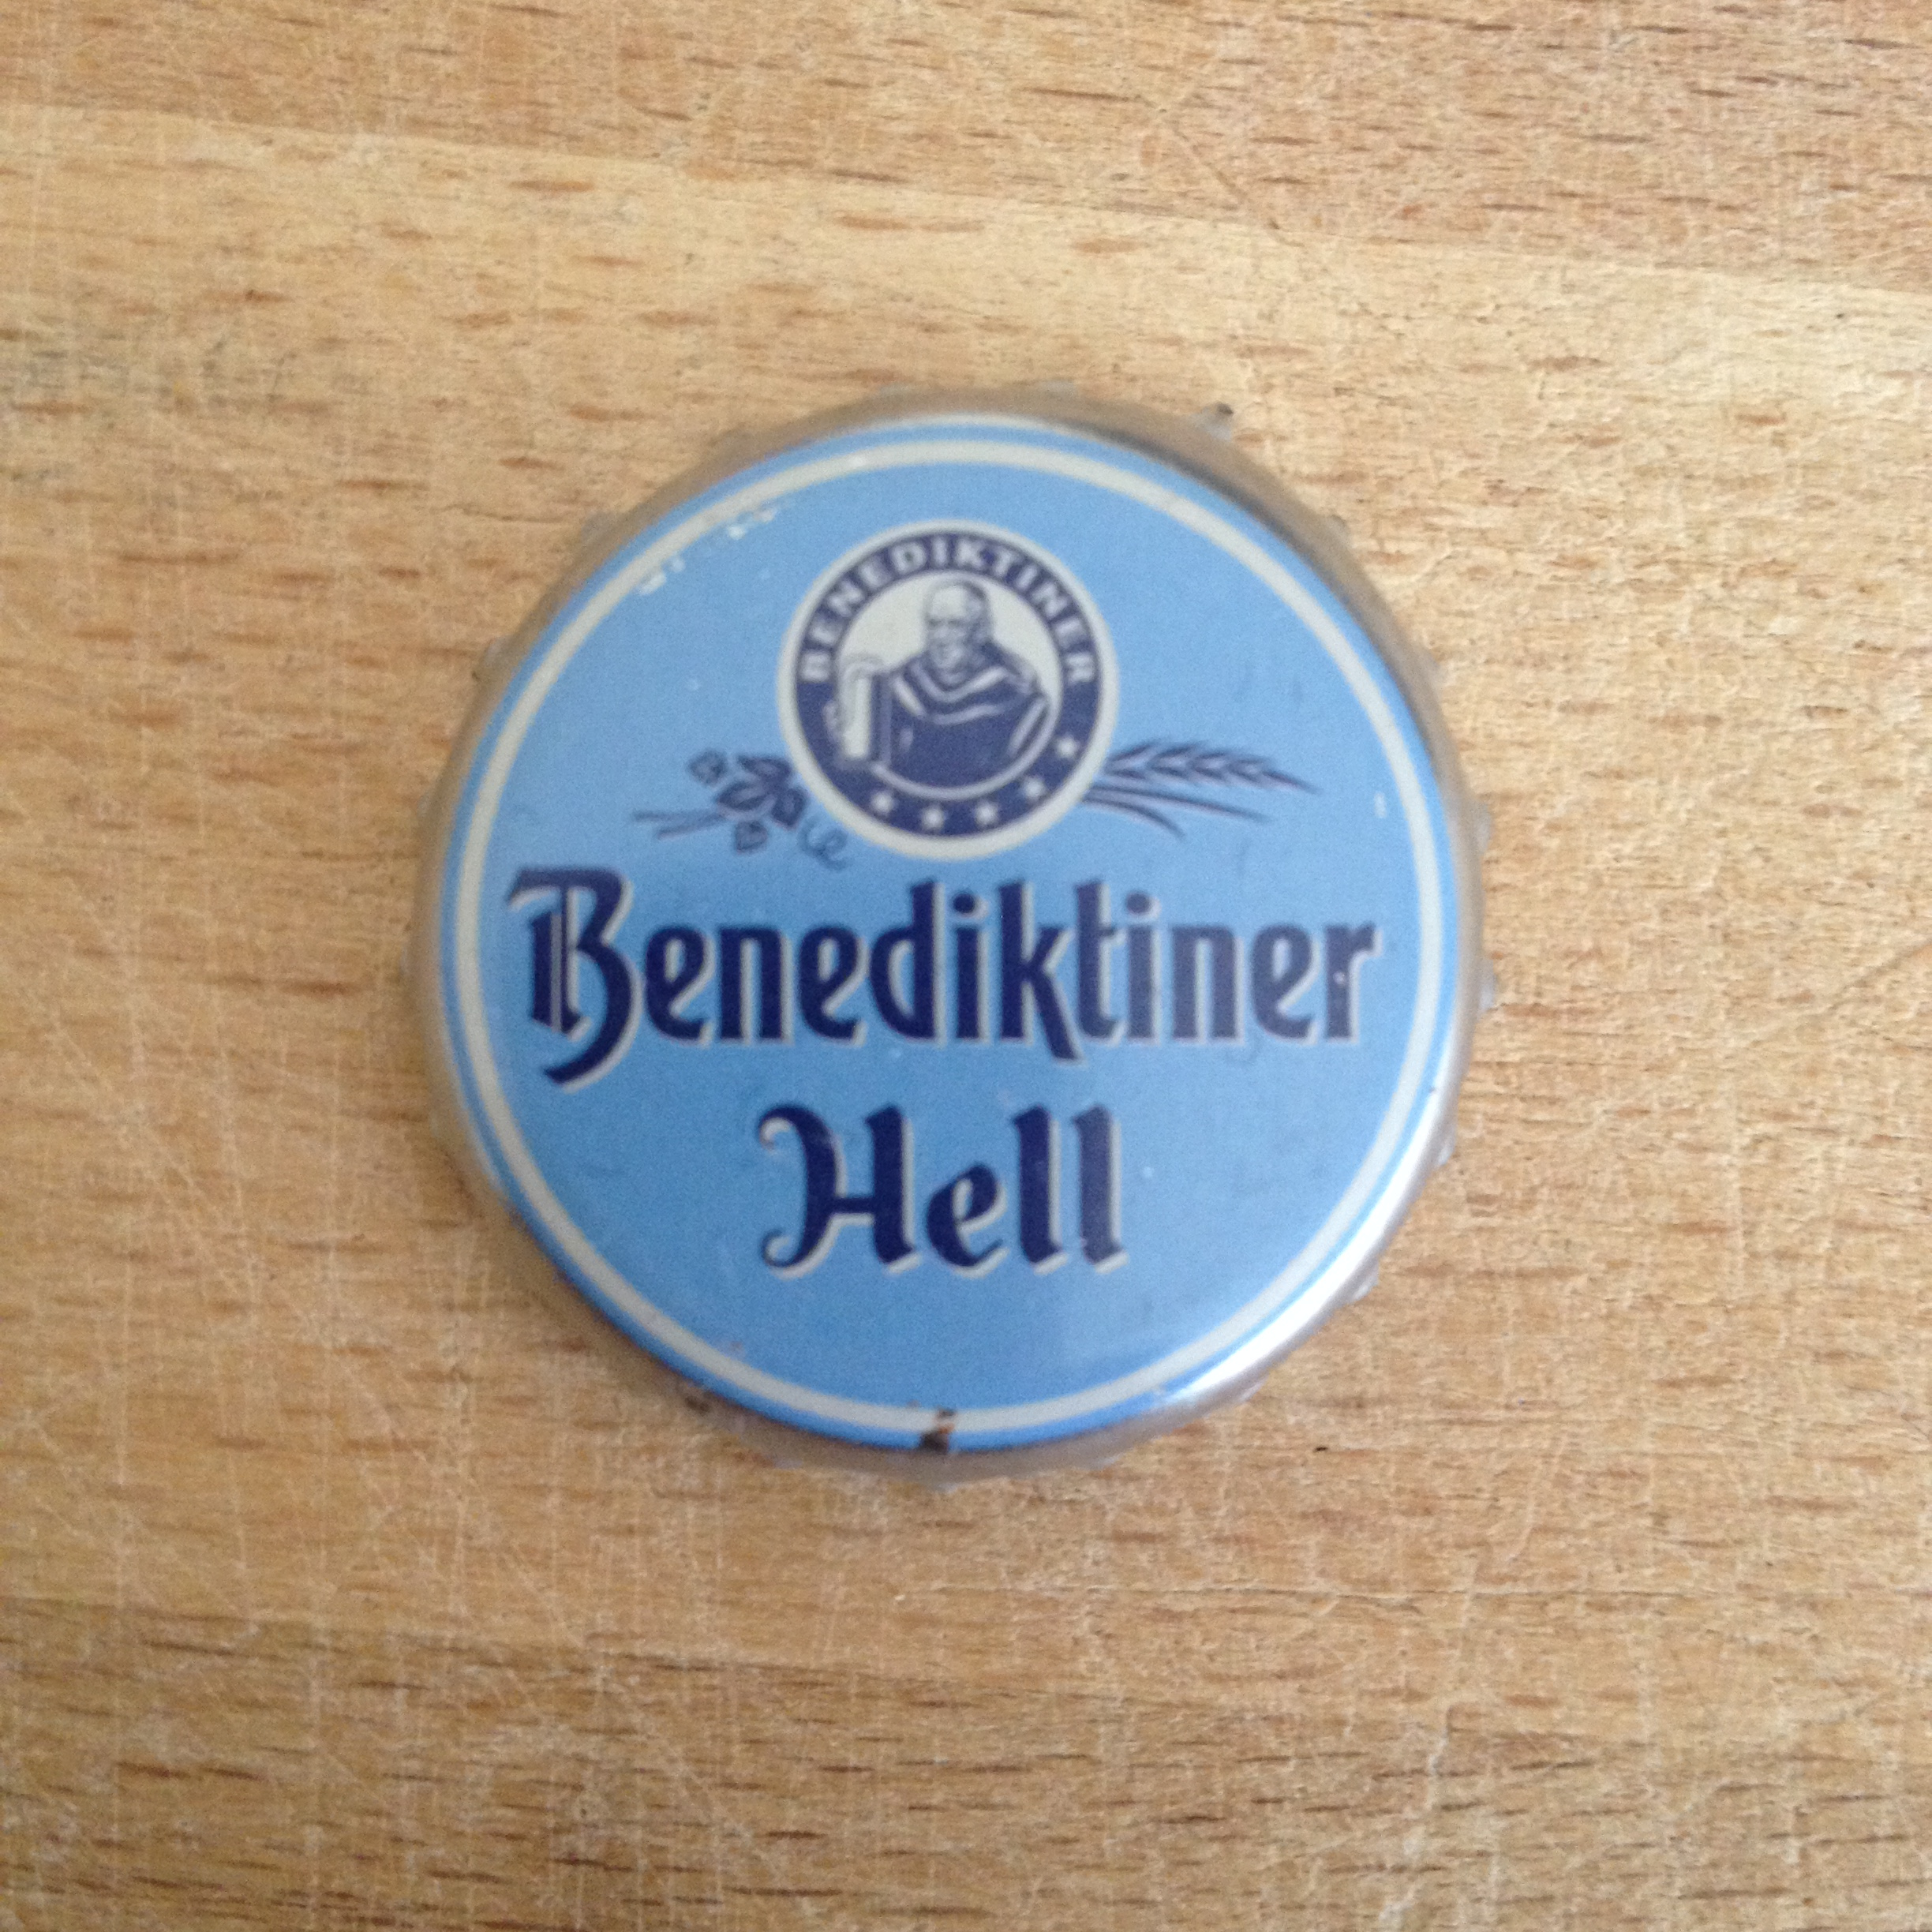 Benediktiner Hell